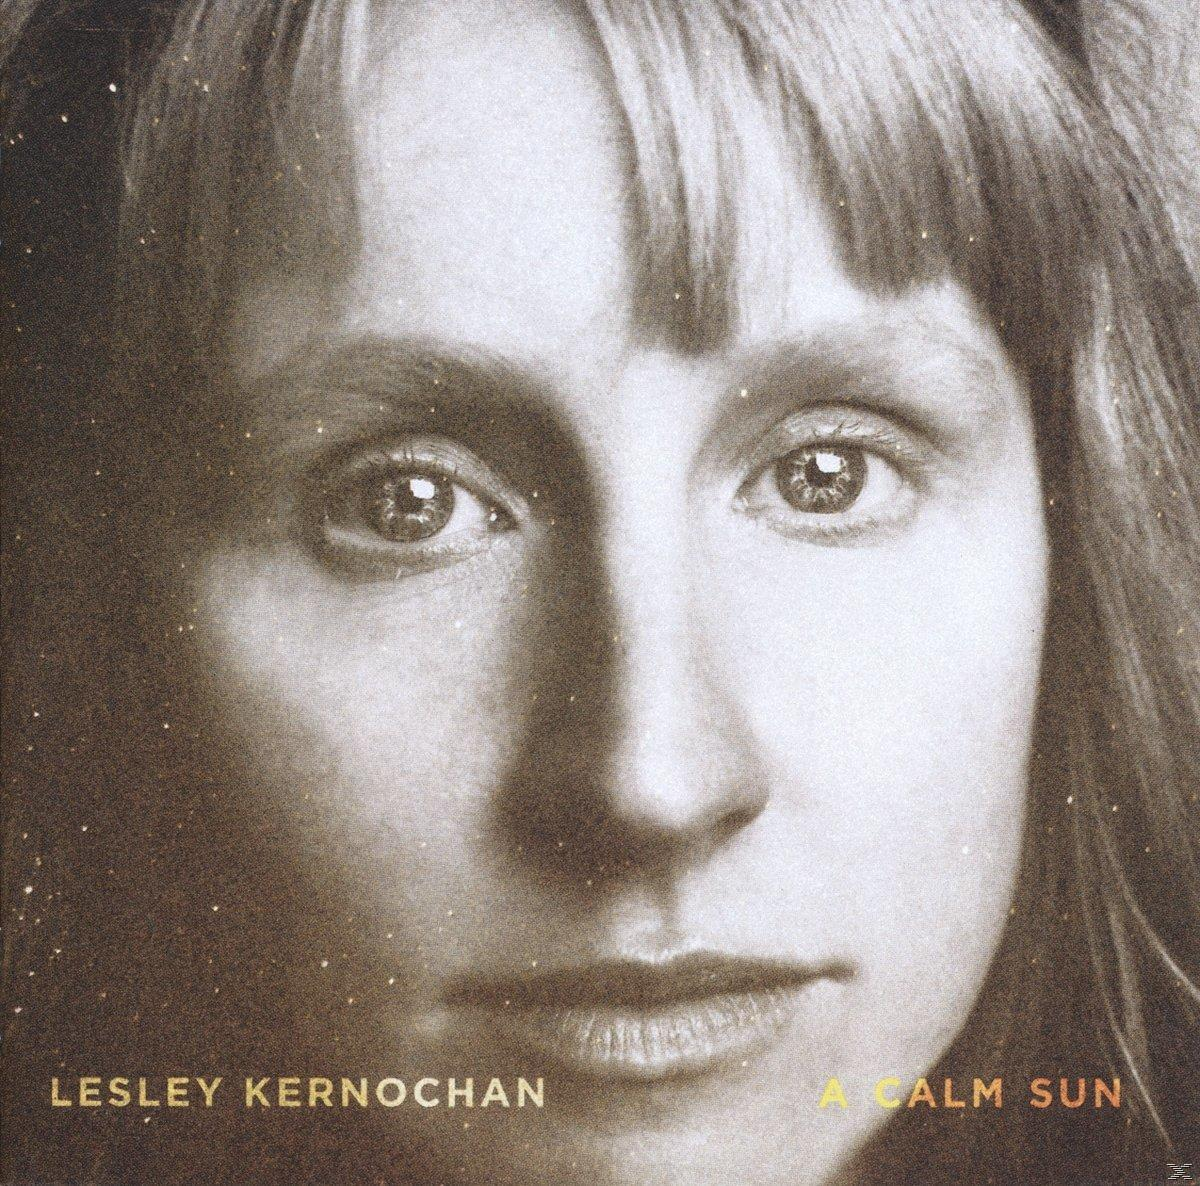 Lesley Kernochan Sun A - (CD) - Calm